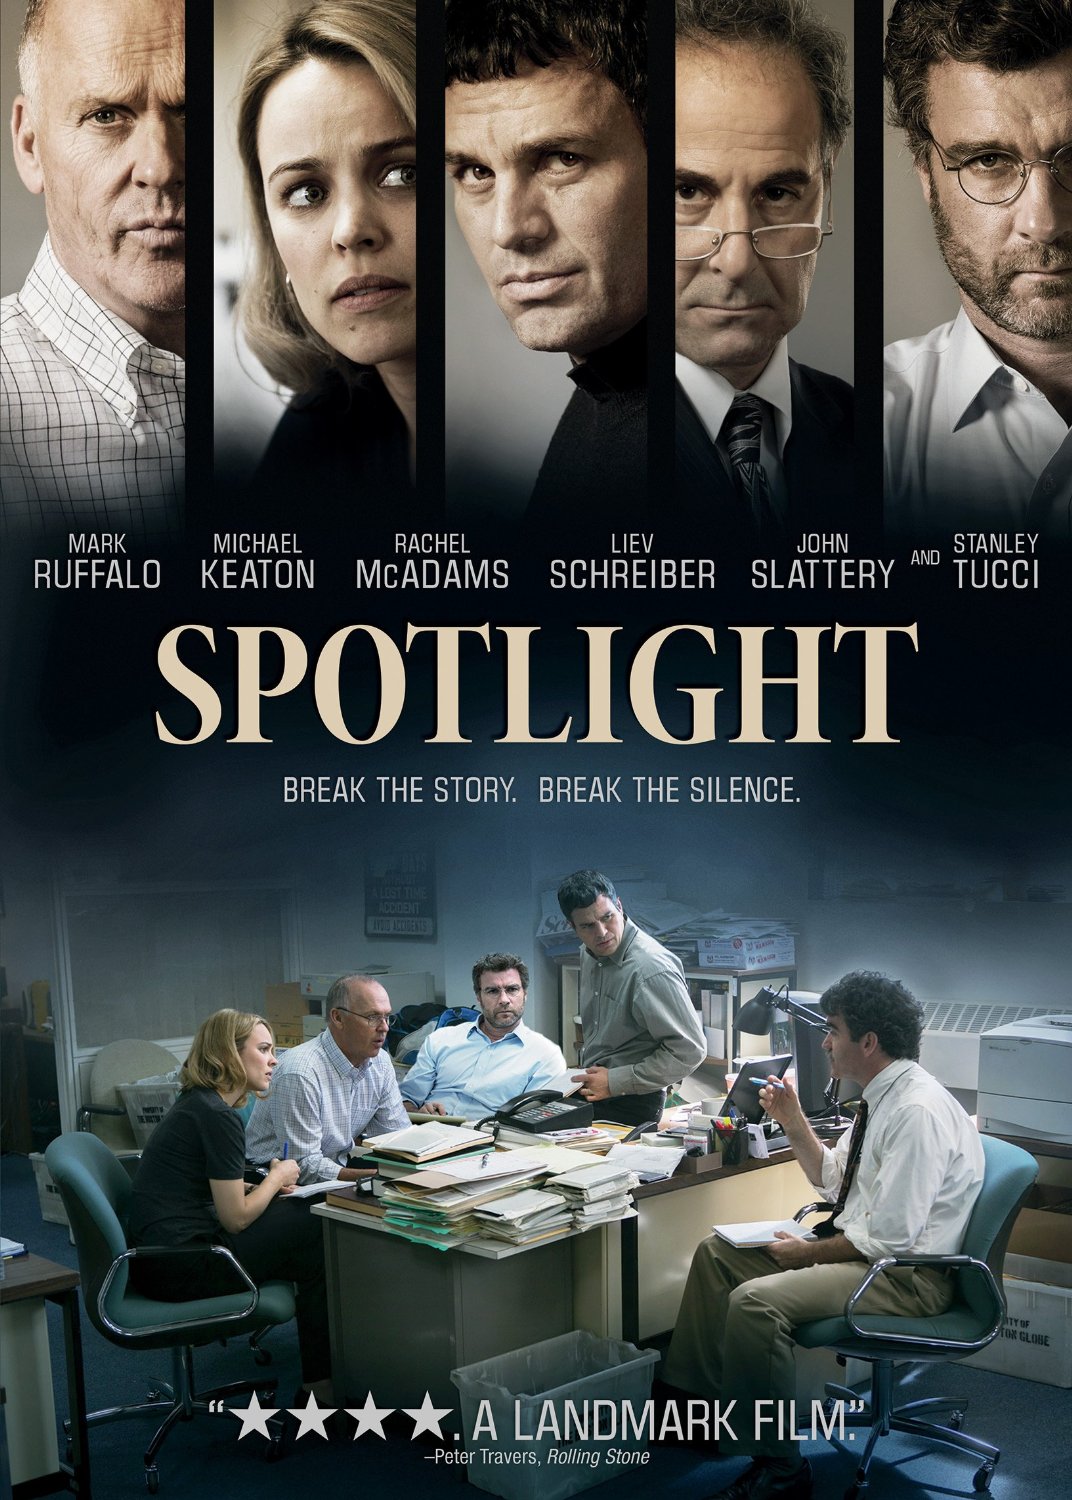 Spotlight (2015) Movie Poster Google image from http://library.hsmc.edu.hk/images/dvd_cover/000254347.jpg